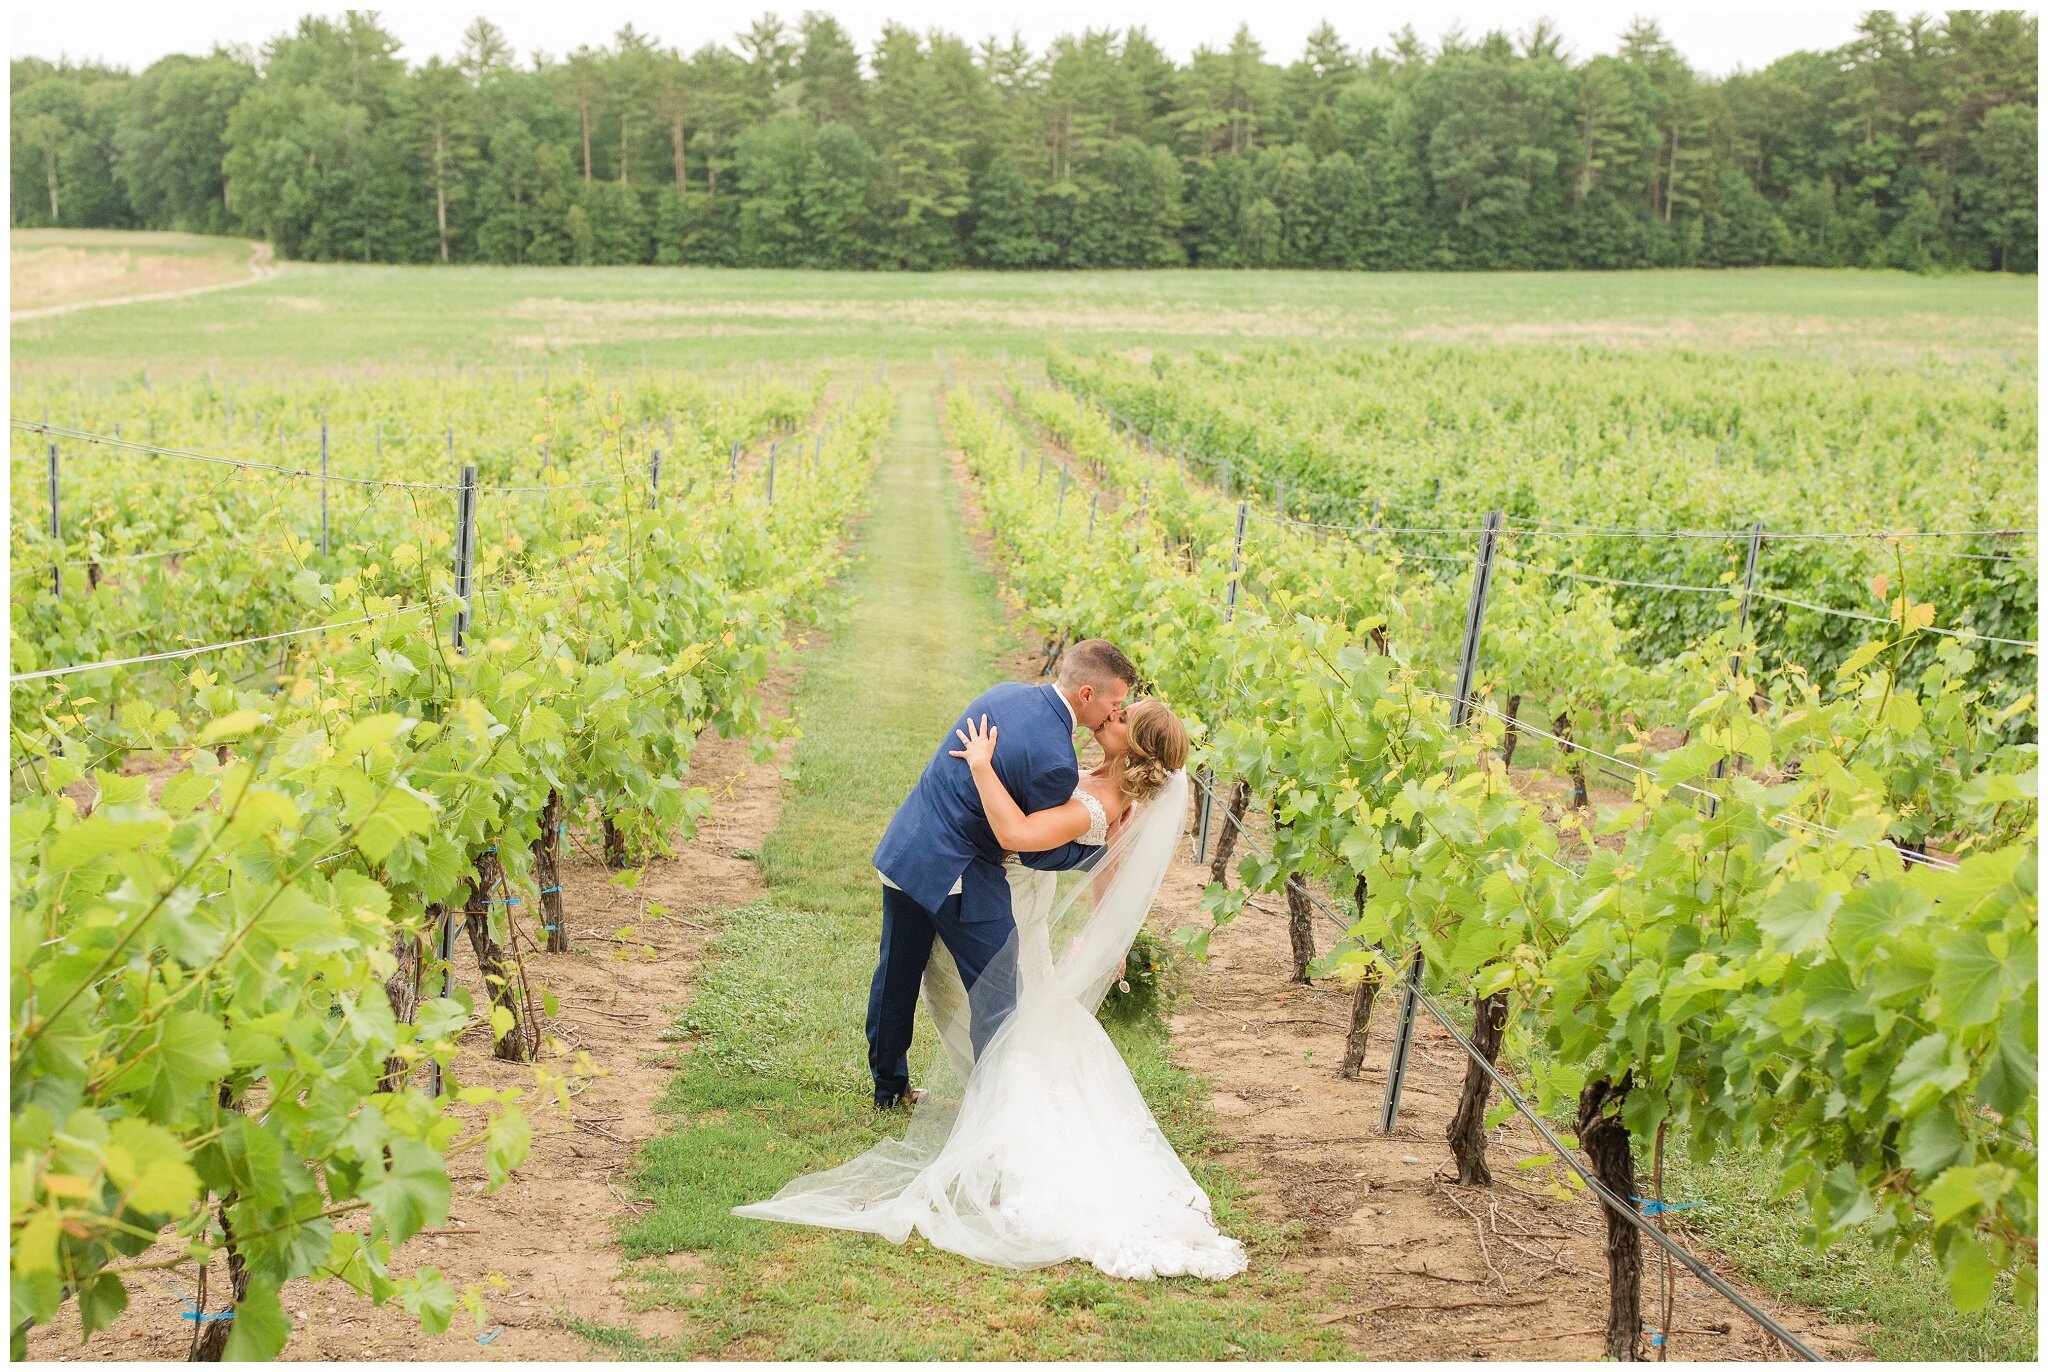 nh summer wedding at winery - rivercrest villas prep hotel location